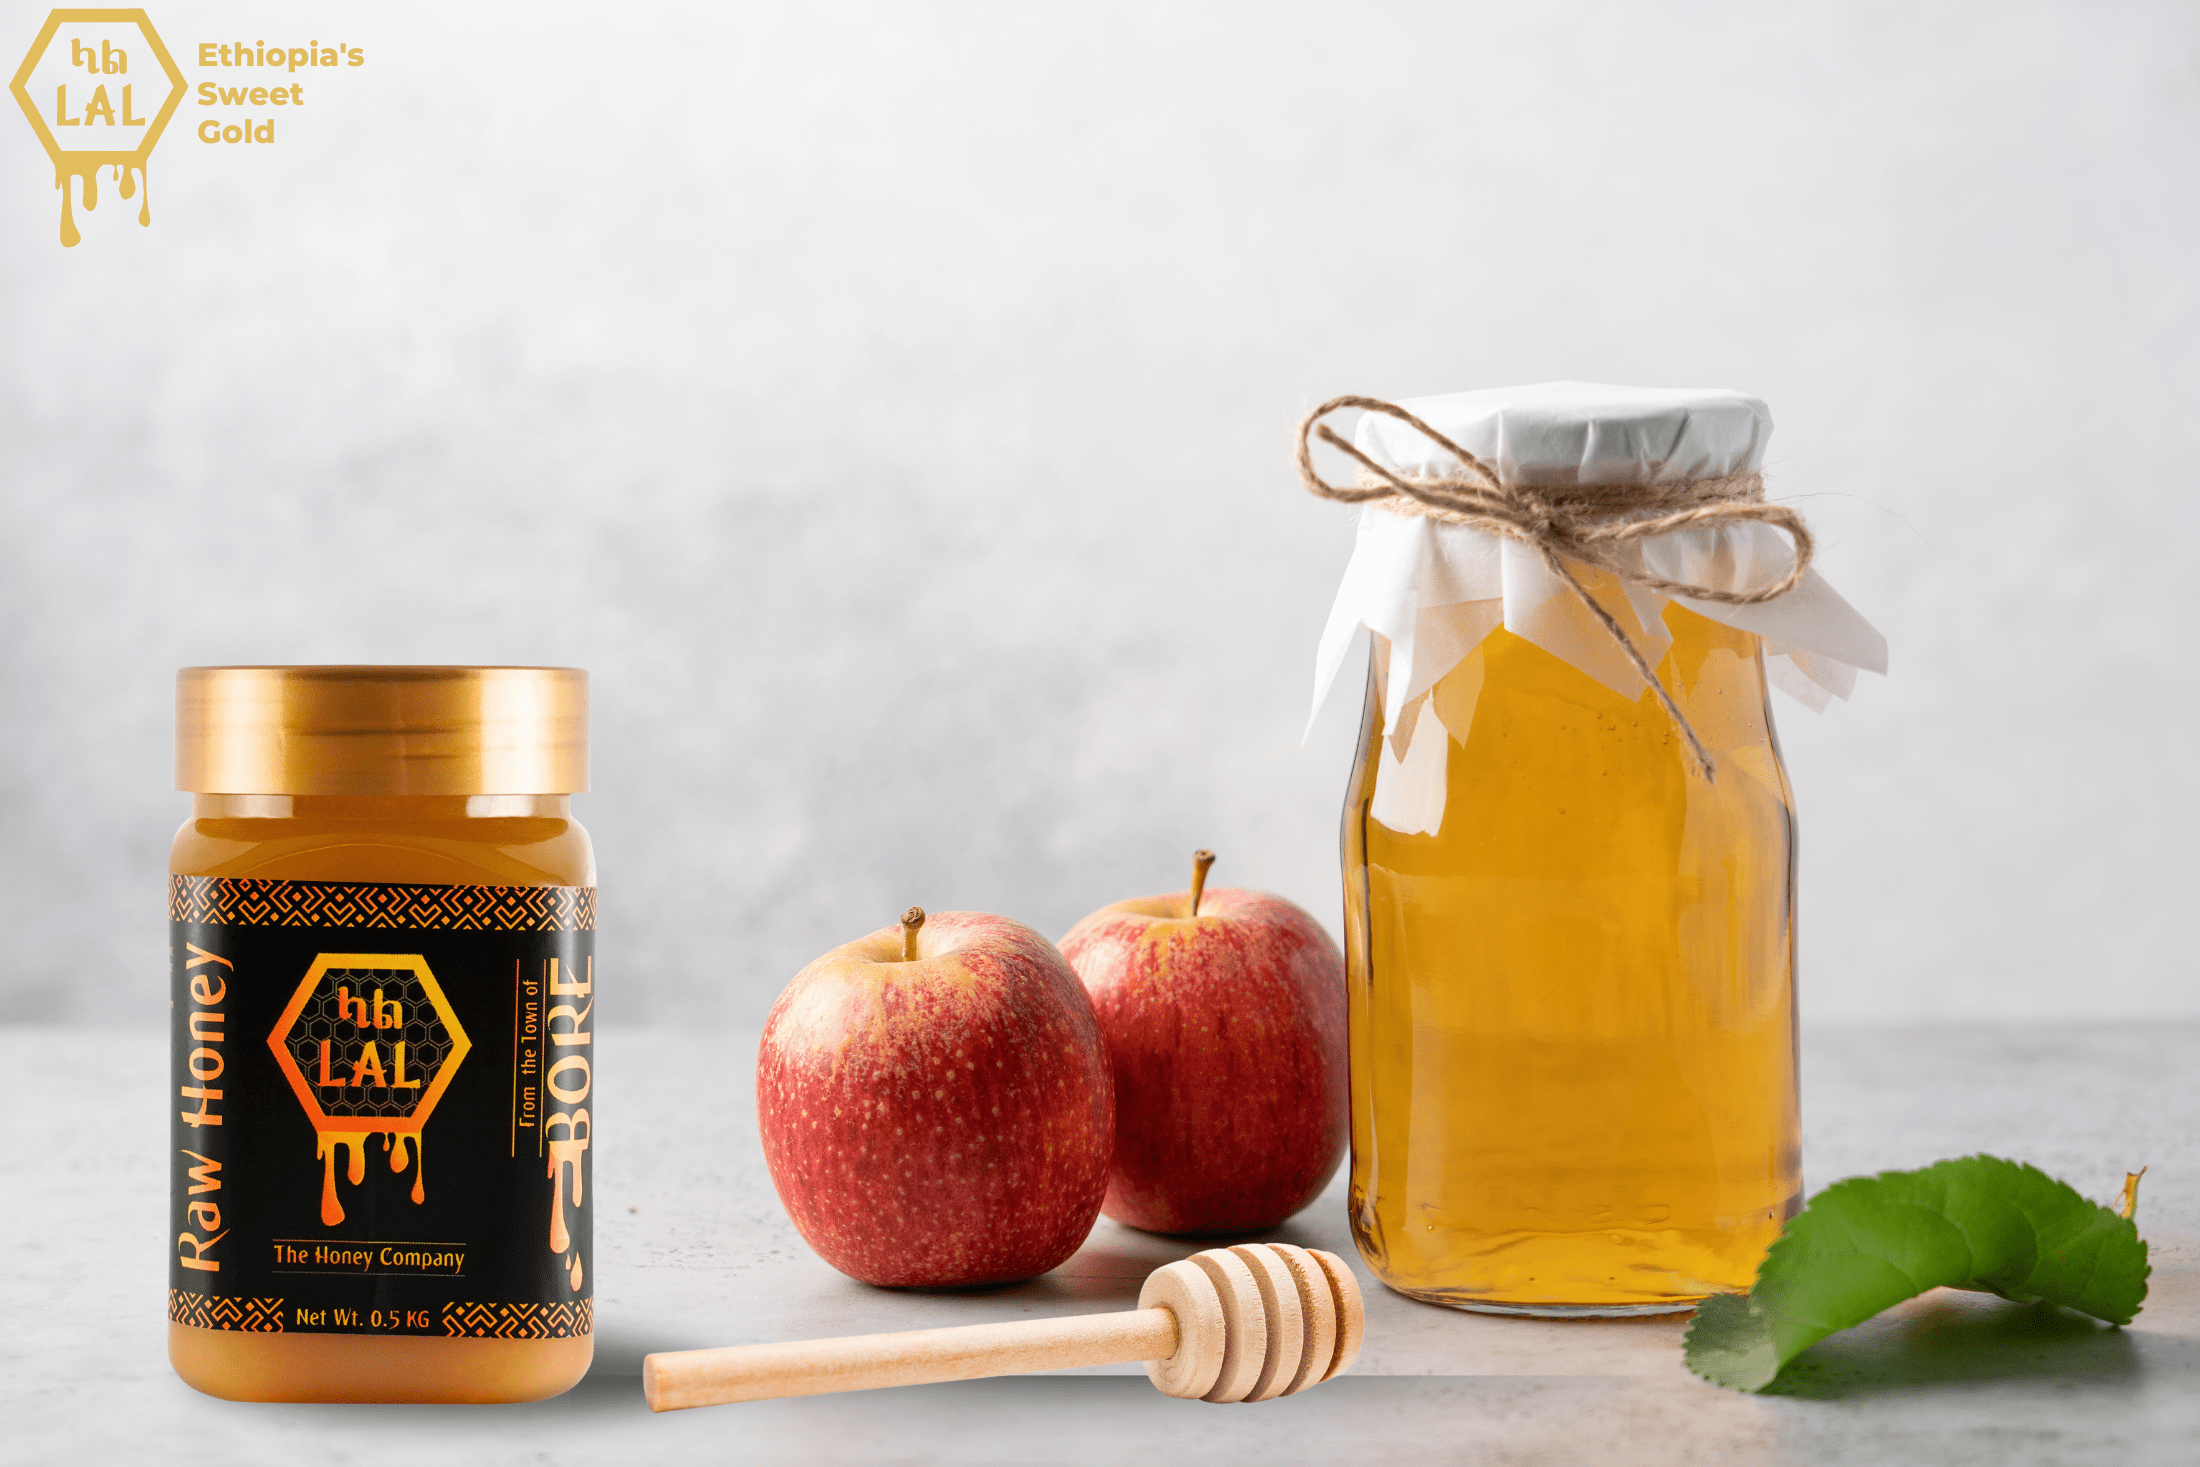 A serene landscape featuring apple cider vinegar, a jar of Ethiopian honey against a backdrop of Ethiopian landscapes, symbolizing the blend of health and culture.